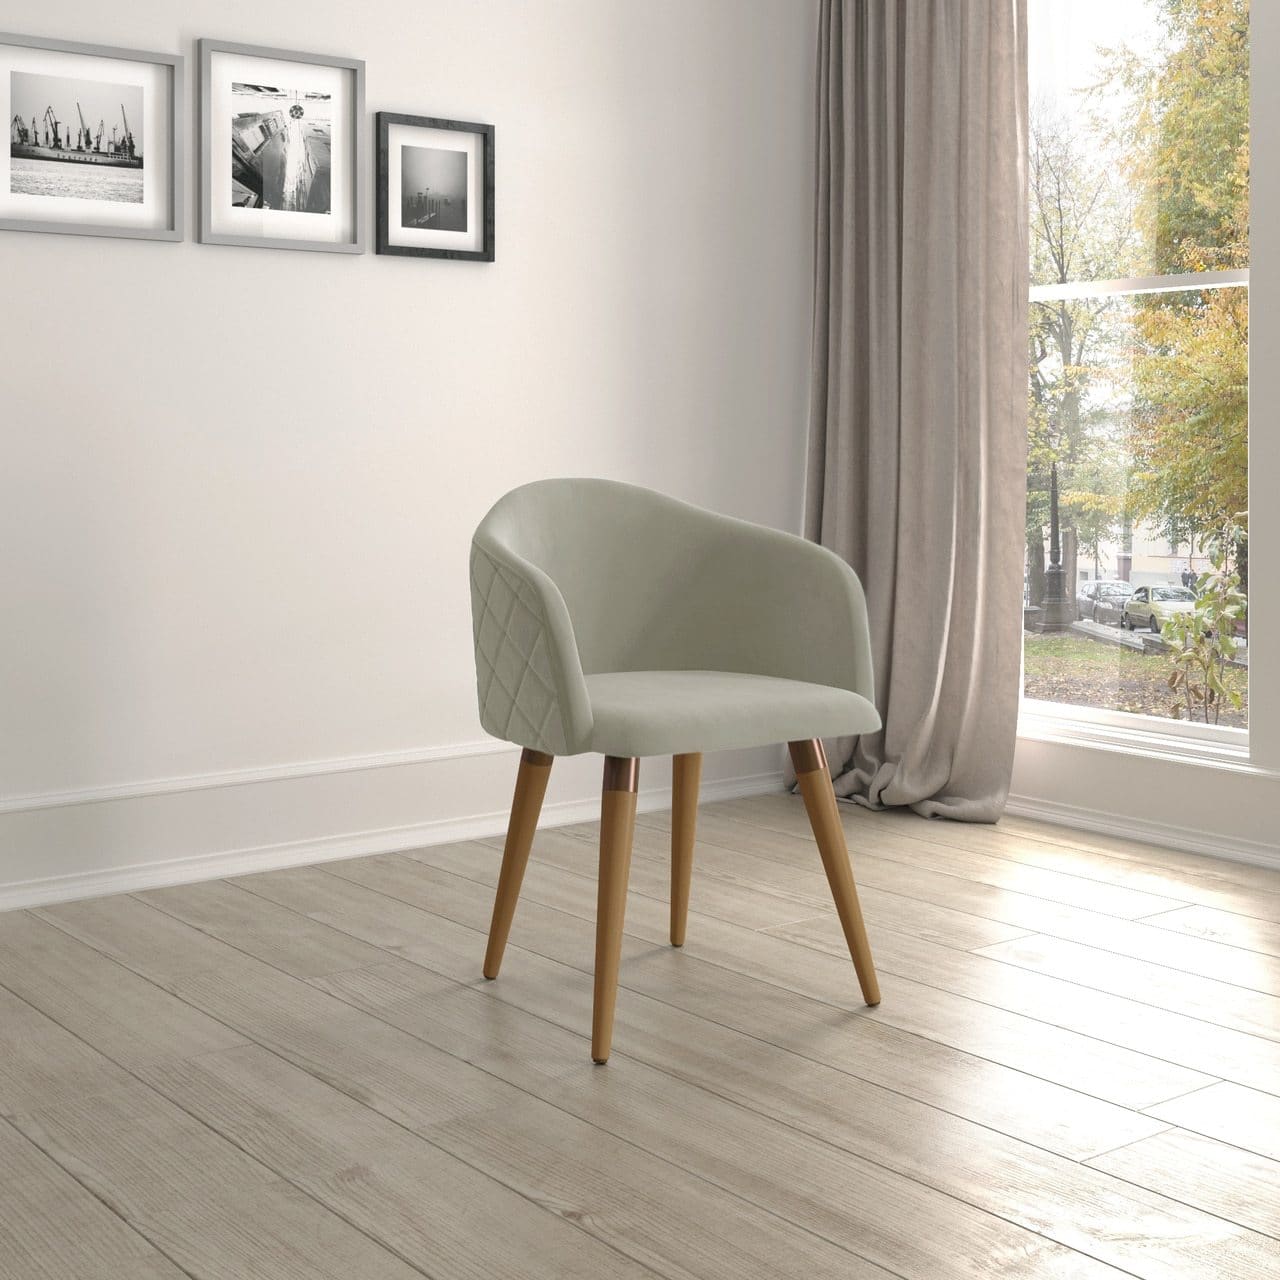 Manhattan Comfort Kari Velvet Matelassé Accent Chair in Beige - Set of 2 1020481 810025591243